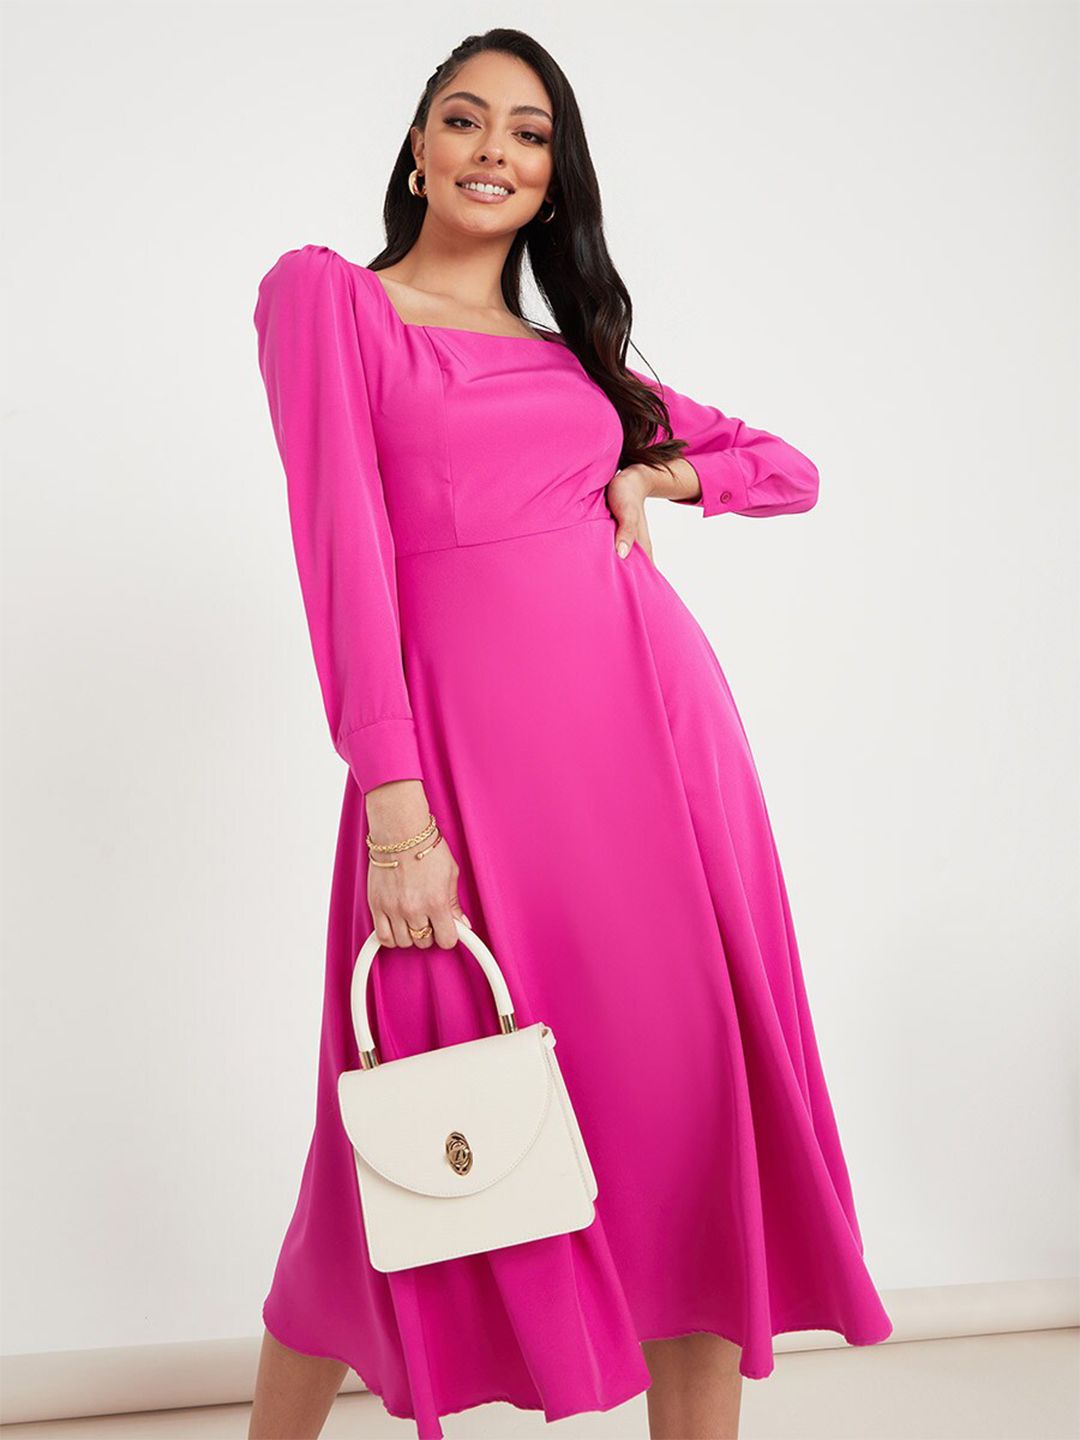 Styli Purple Midi Dress Price in India